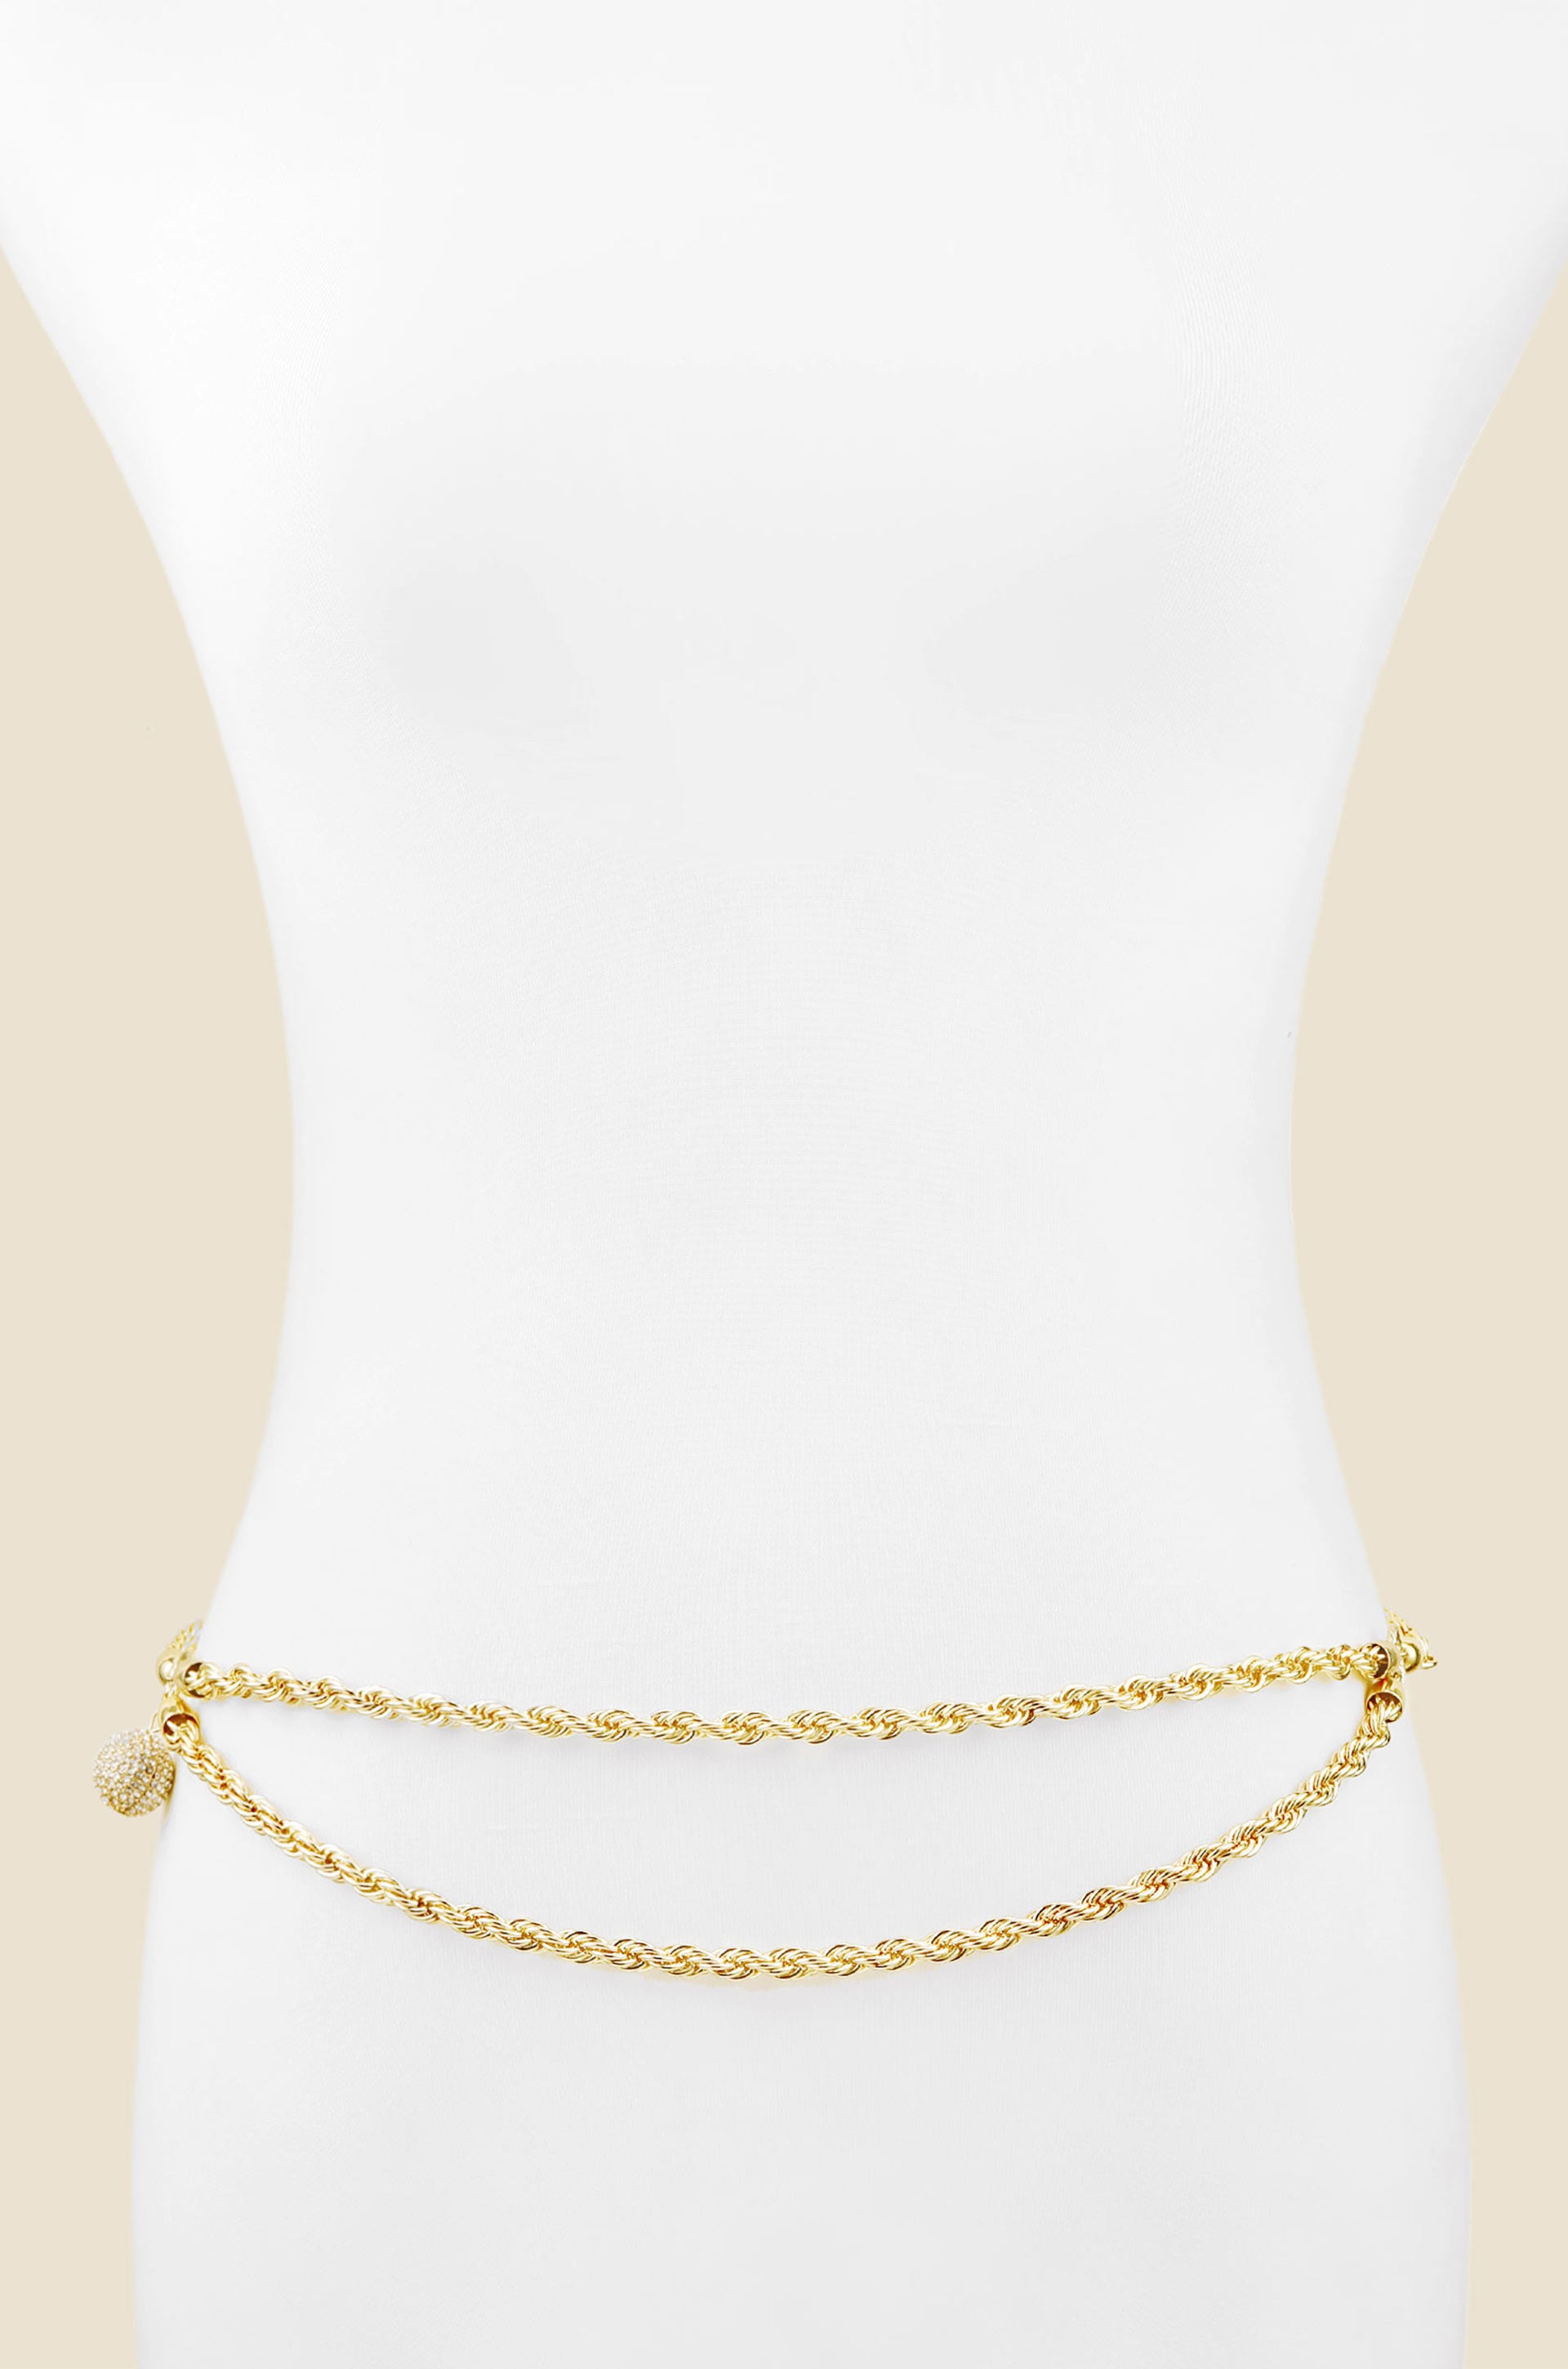 Women Multilayer Gold Metal Link Body Chain Belt Ladies Waist